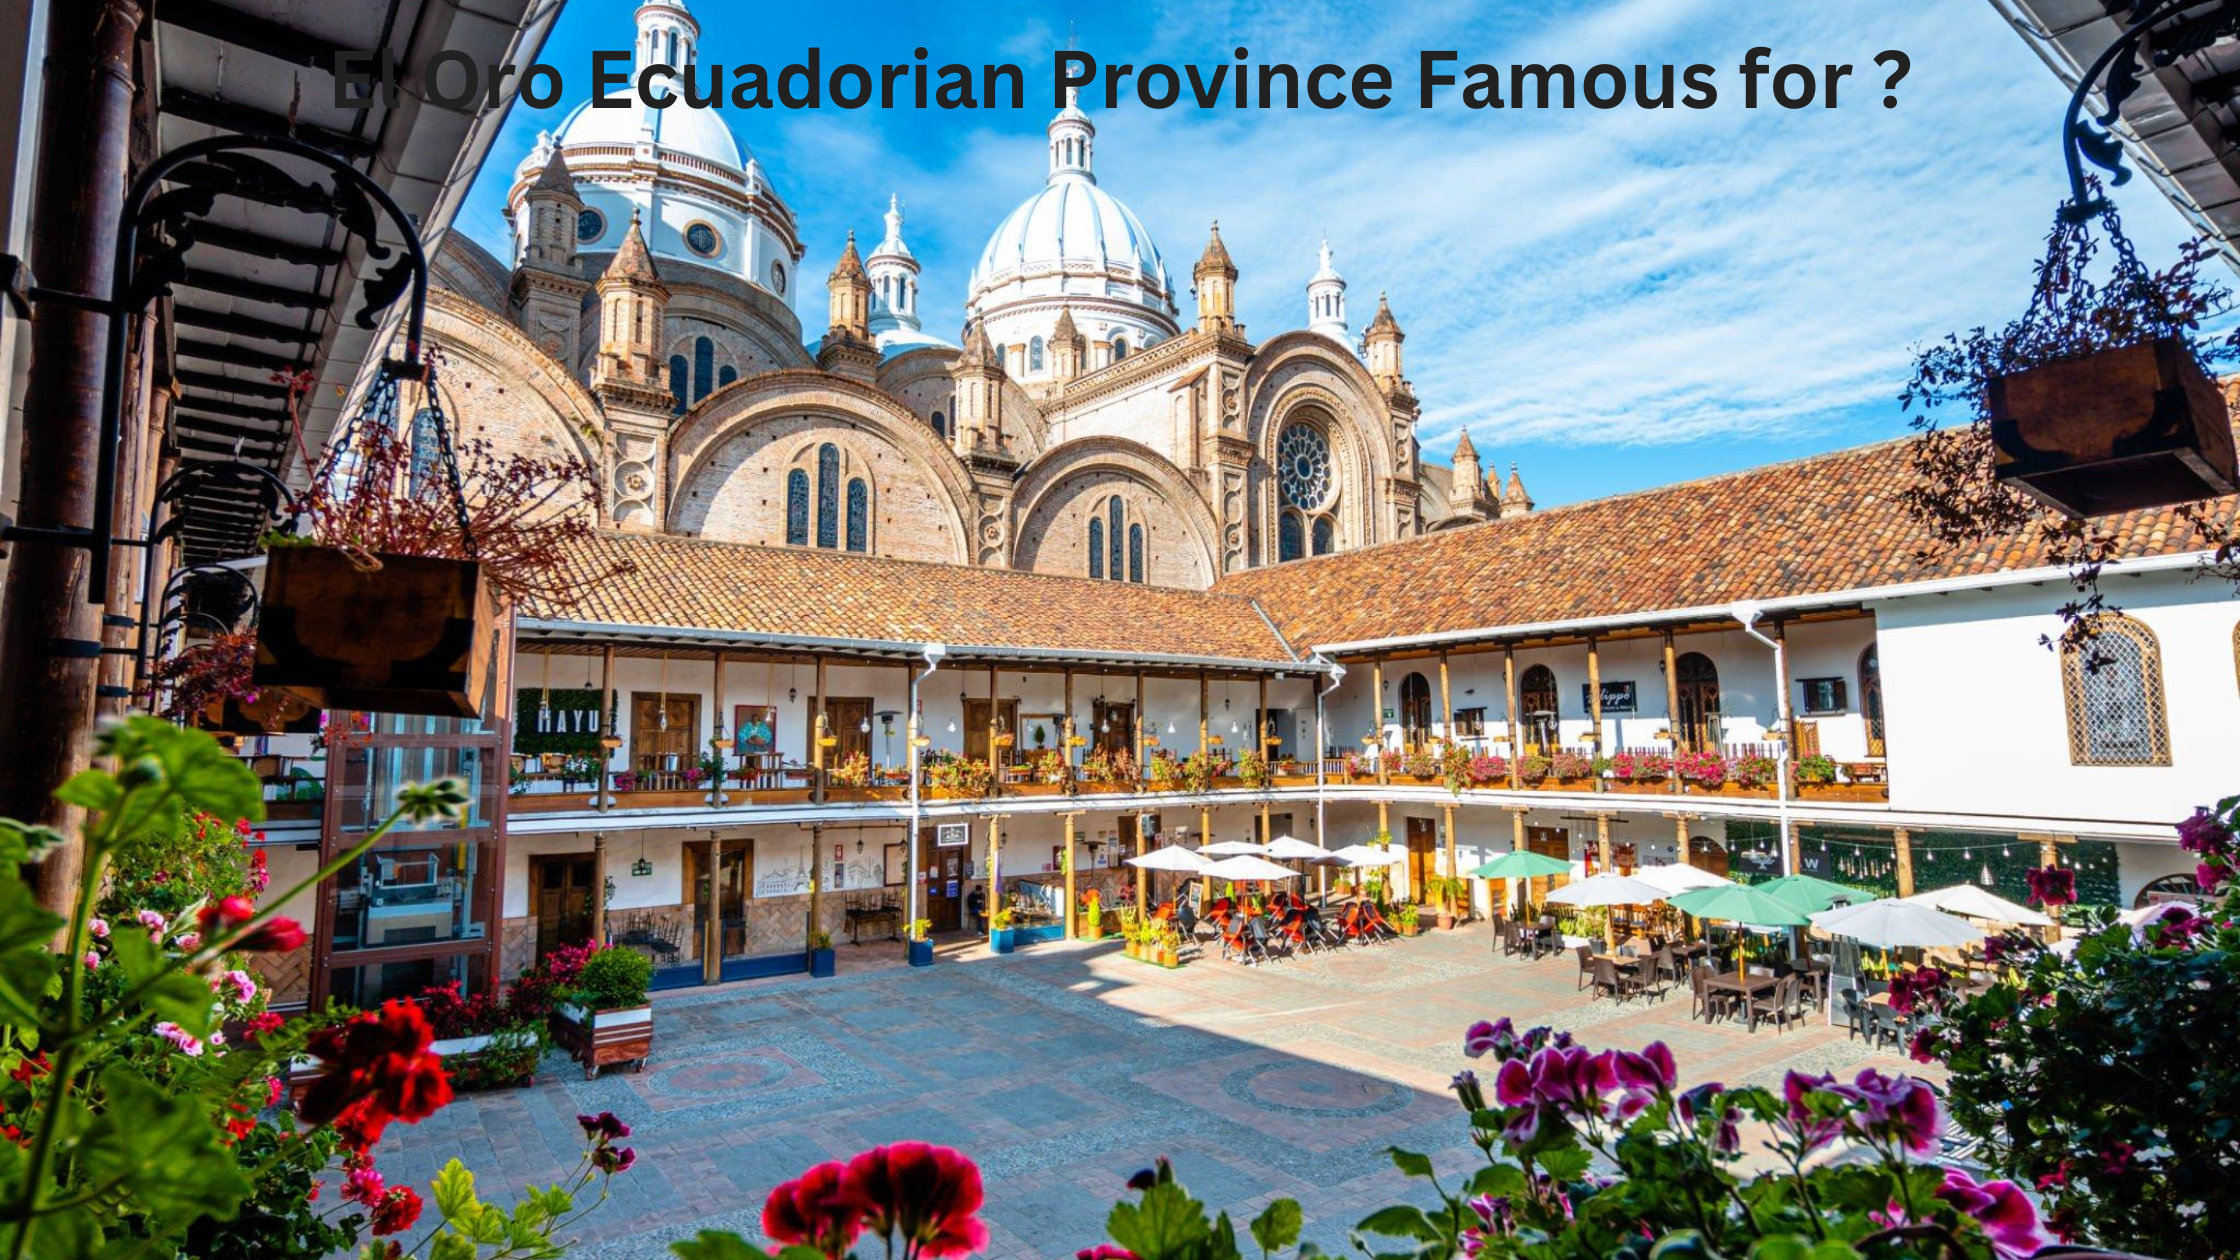 El Oro Ecuadorian Province Famous for